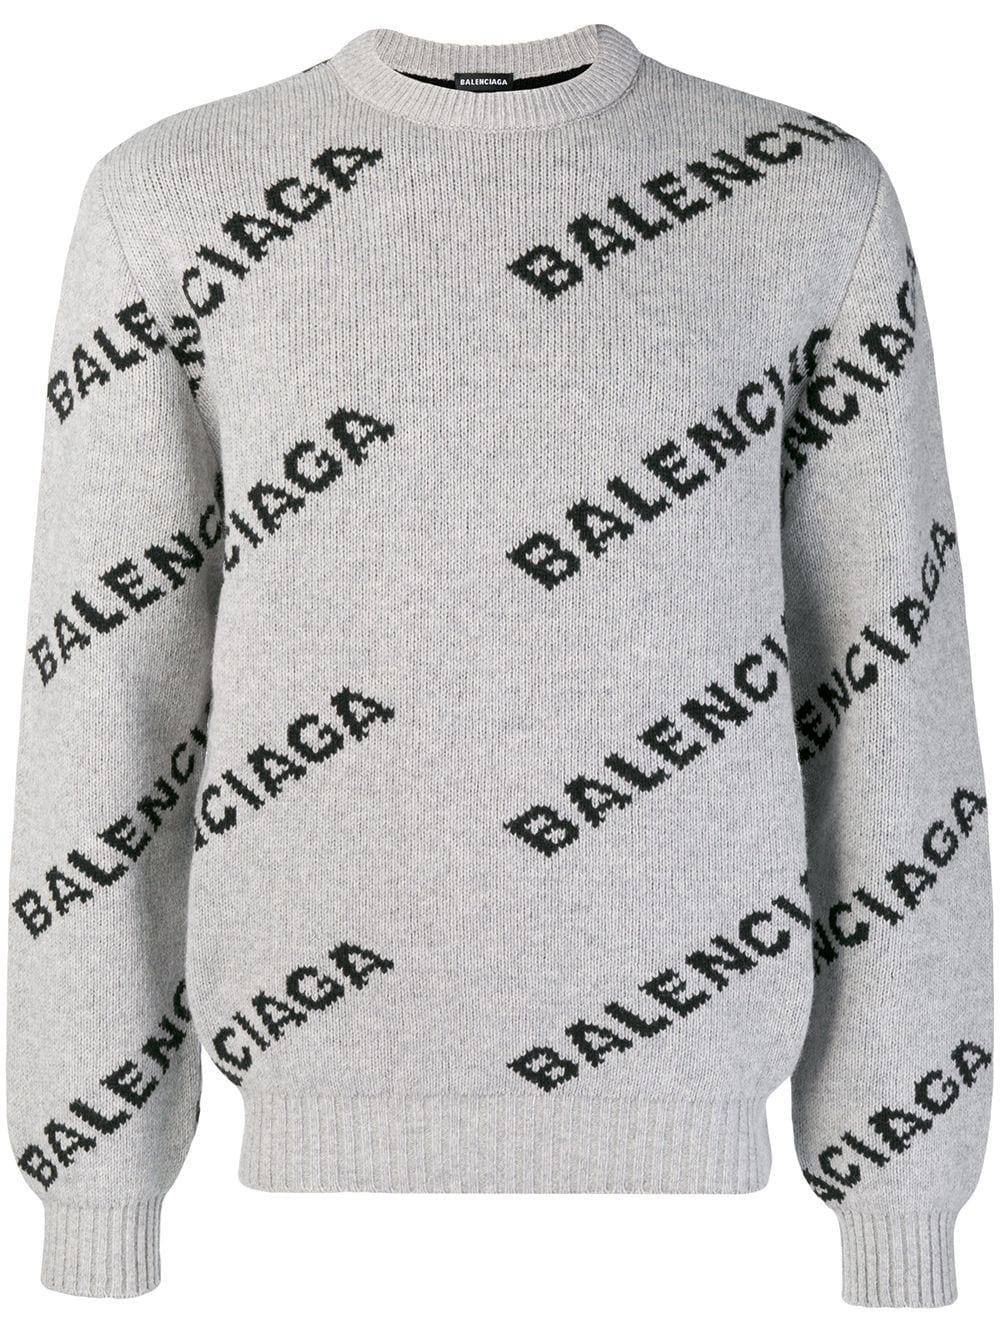 Balenciaga Sweatshirt Grau La France, SAVE 38% - mpgc.net